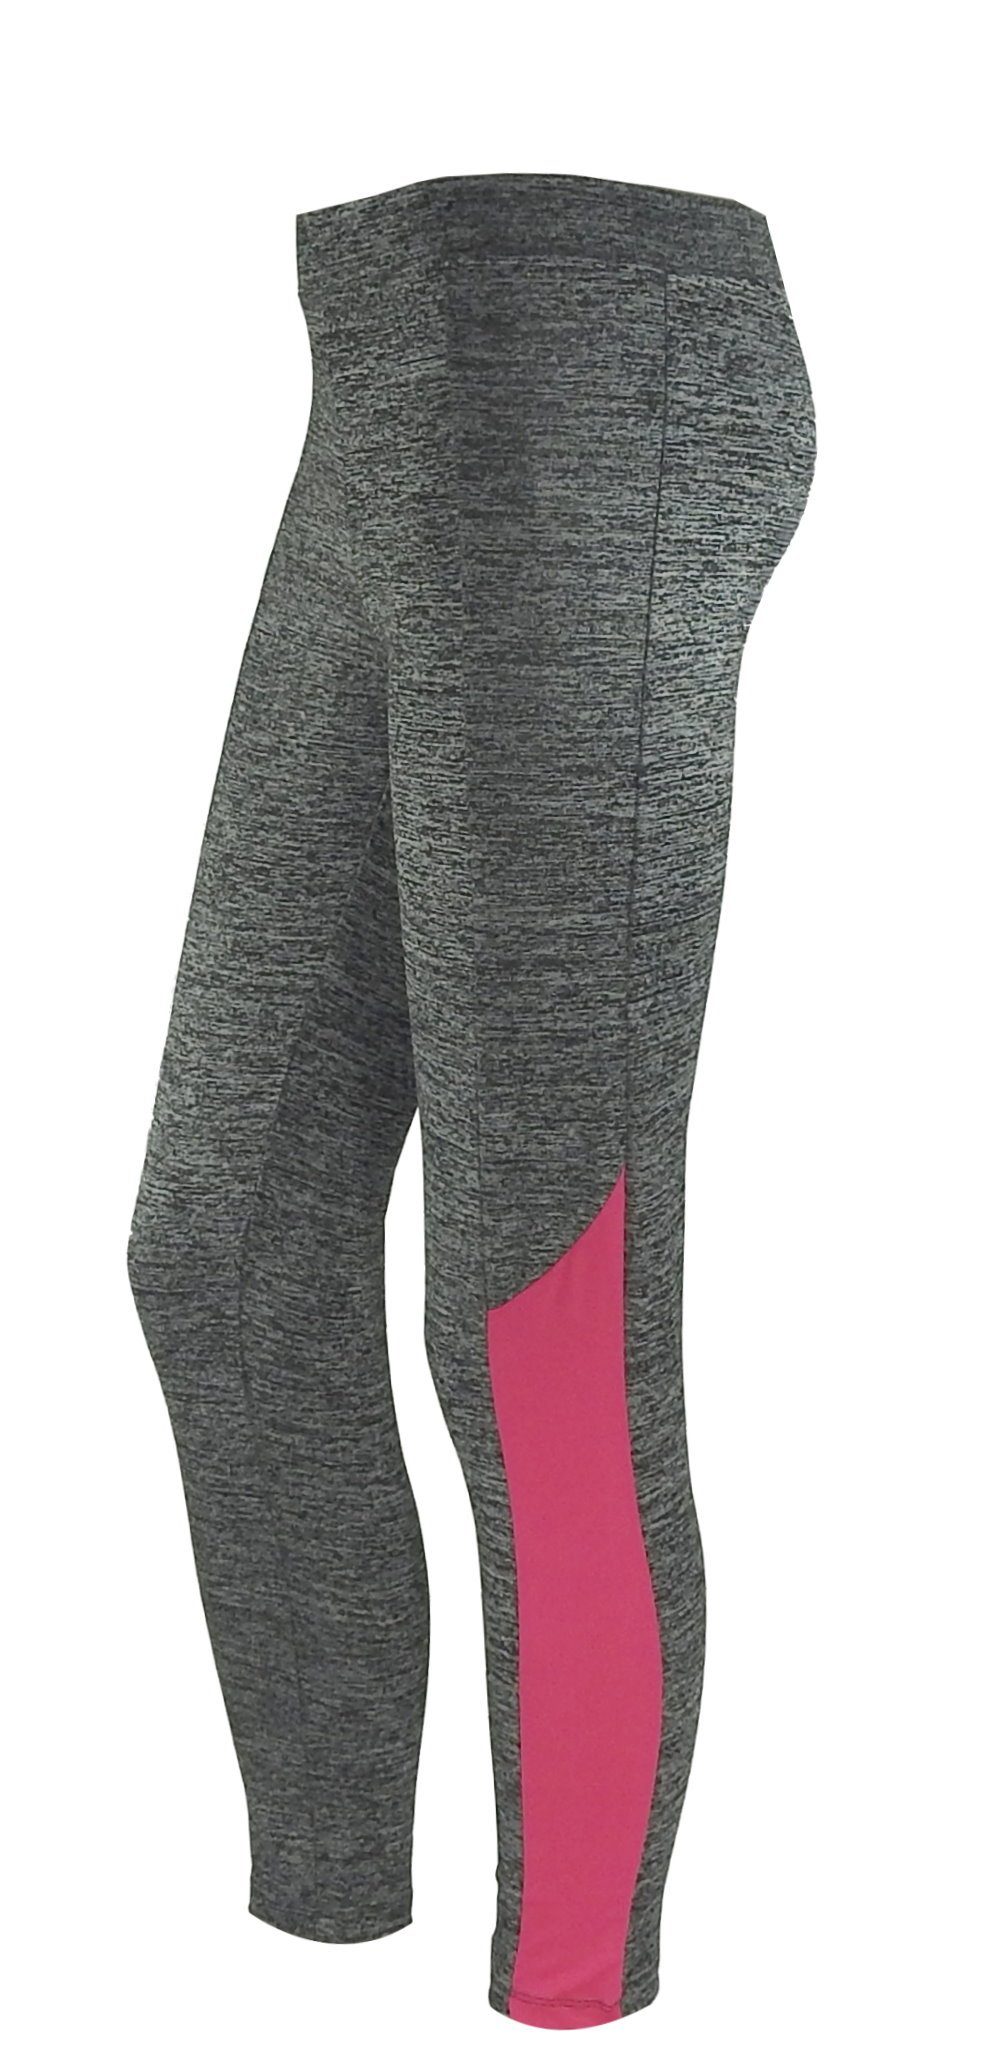 Trainingshose Hosen Leggings Leggins Damen Yoga Sporthose grau dynamic24 Fitness Jogging